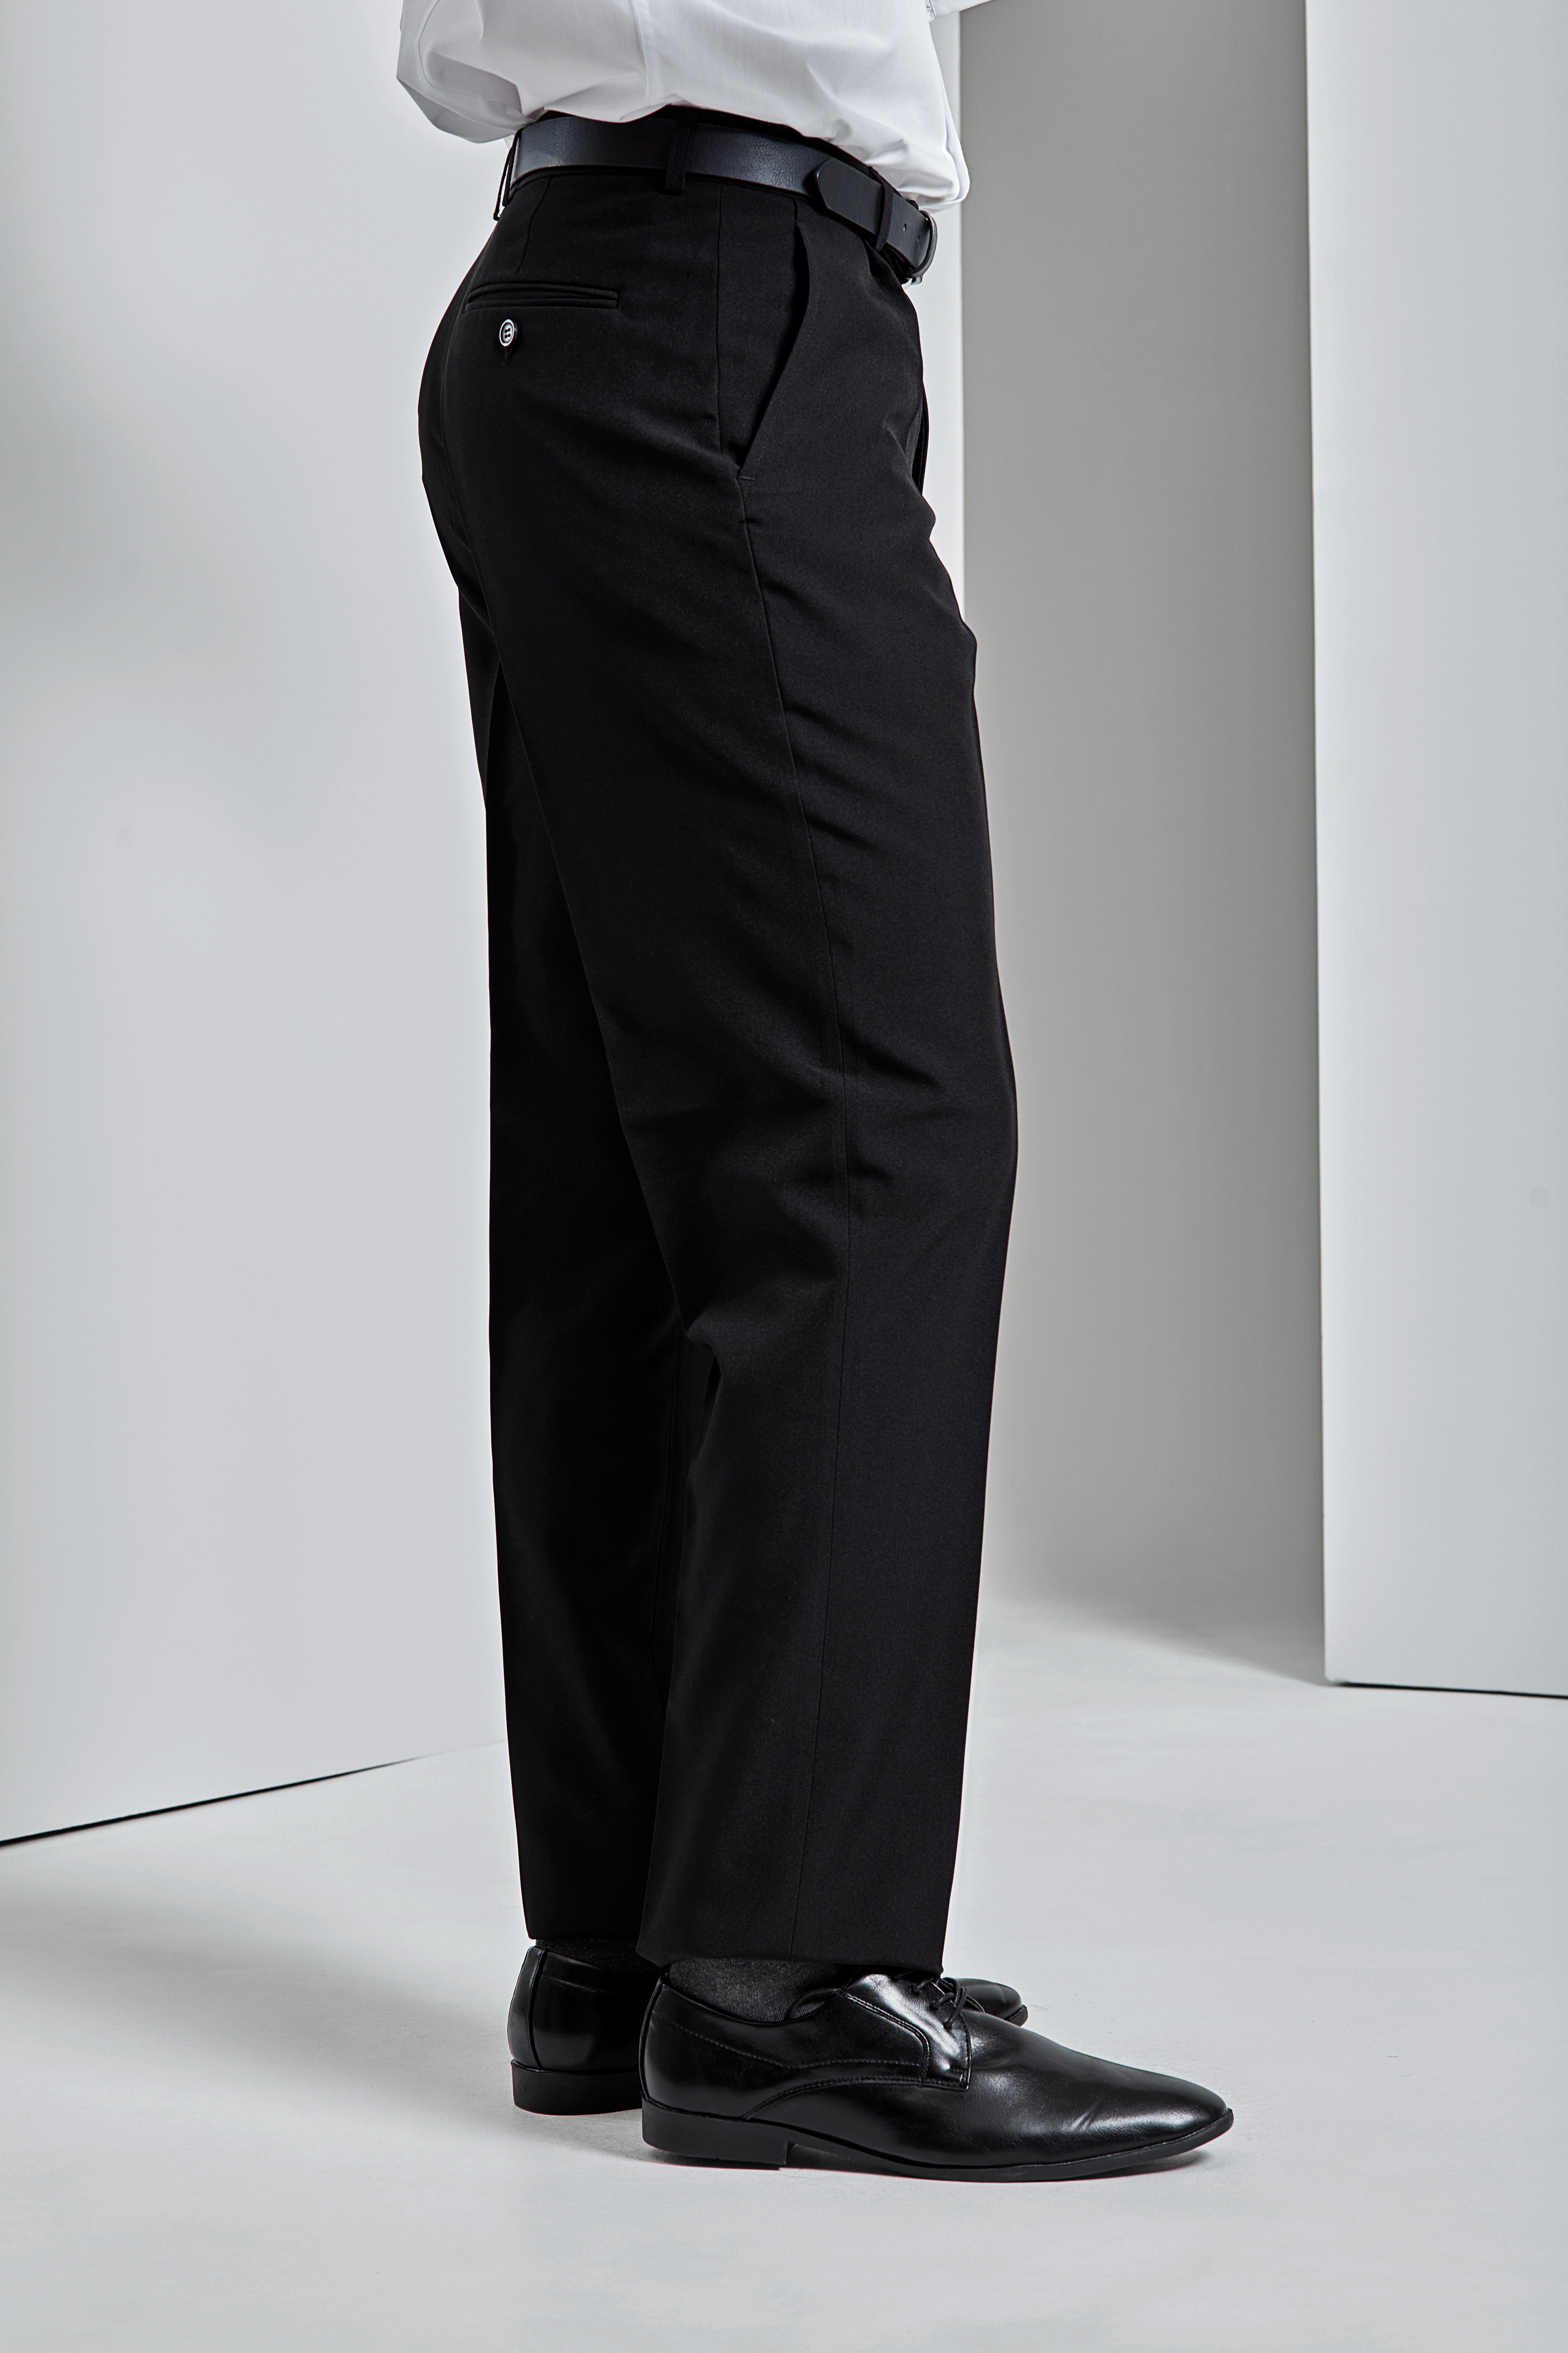 Work pants - PRIMATO - DIKE - polyester / fabric / PES